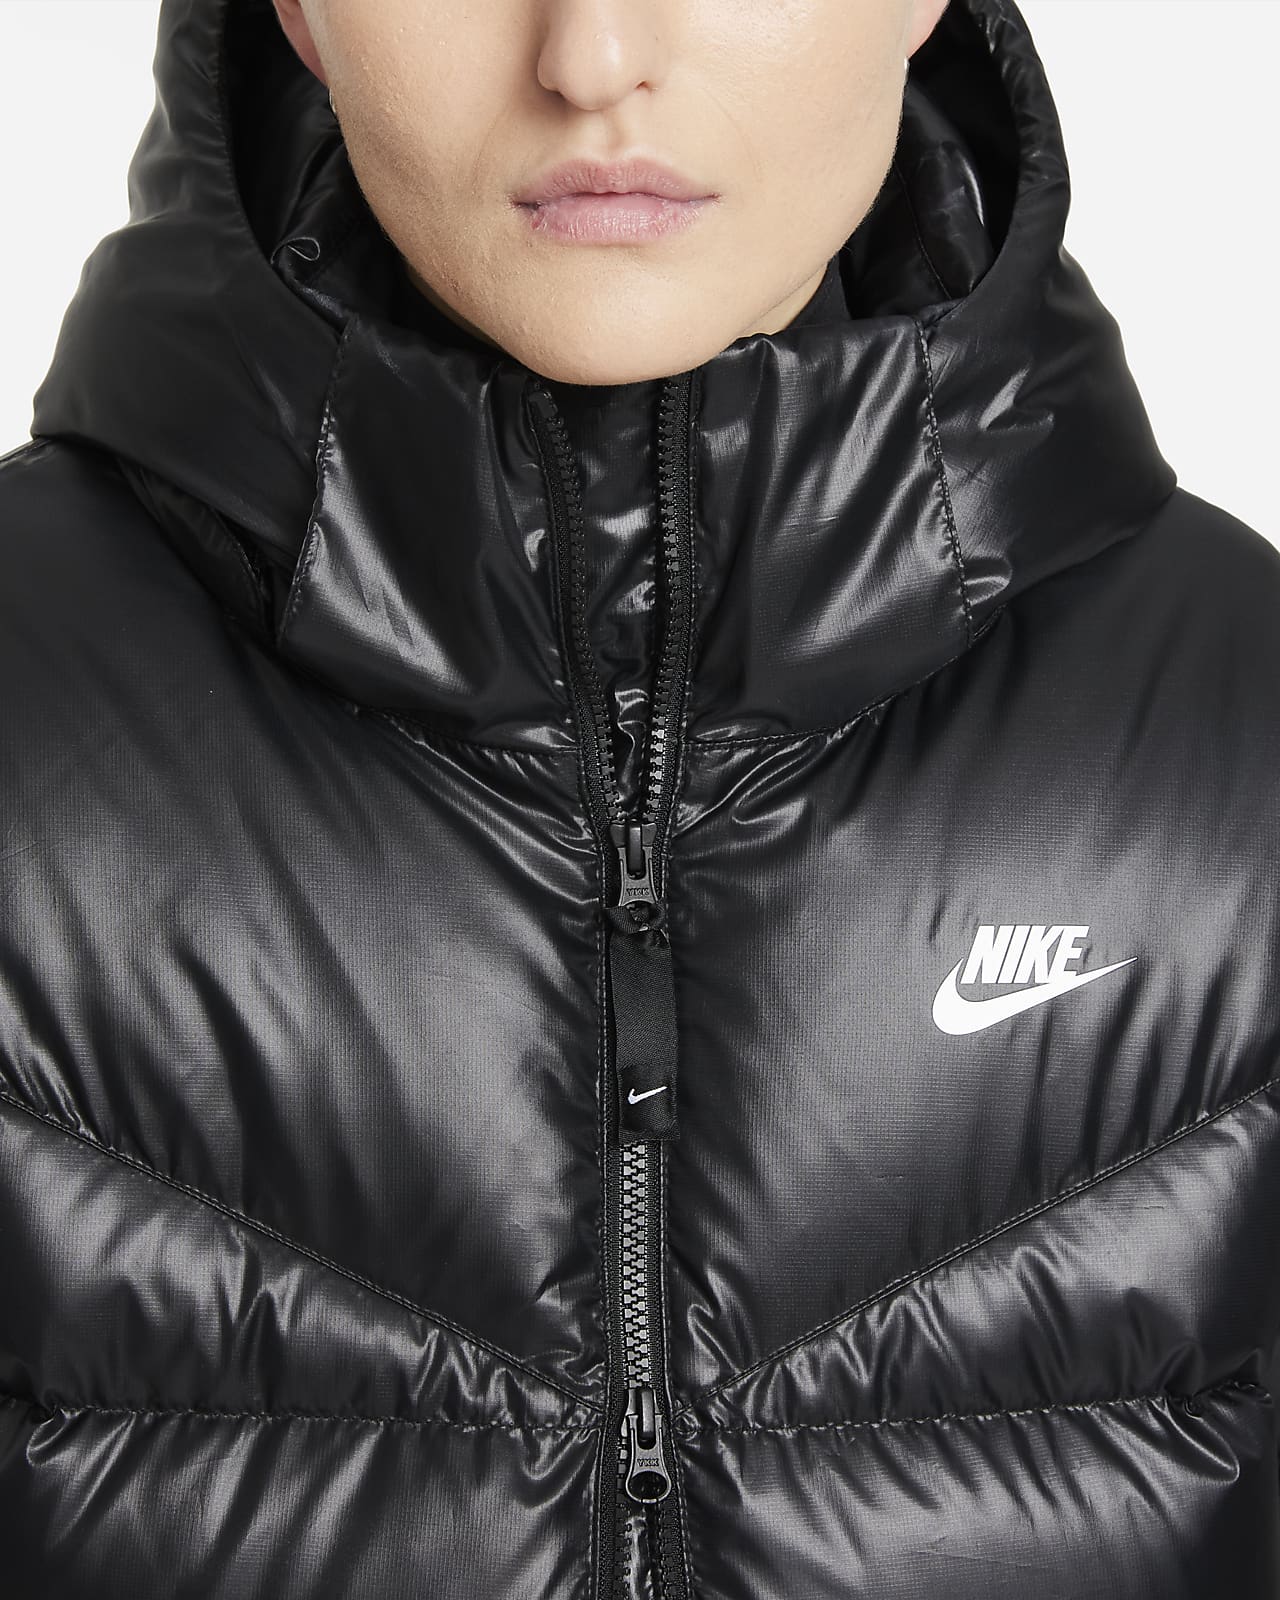 Женский пуховик Nike Therma-fit City Jacket DH4079-010 Последний размер S  Цена с учетом дос�